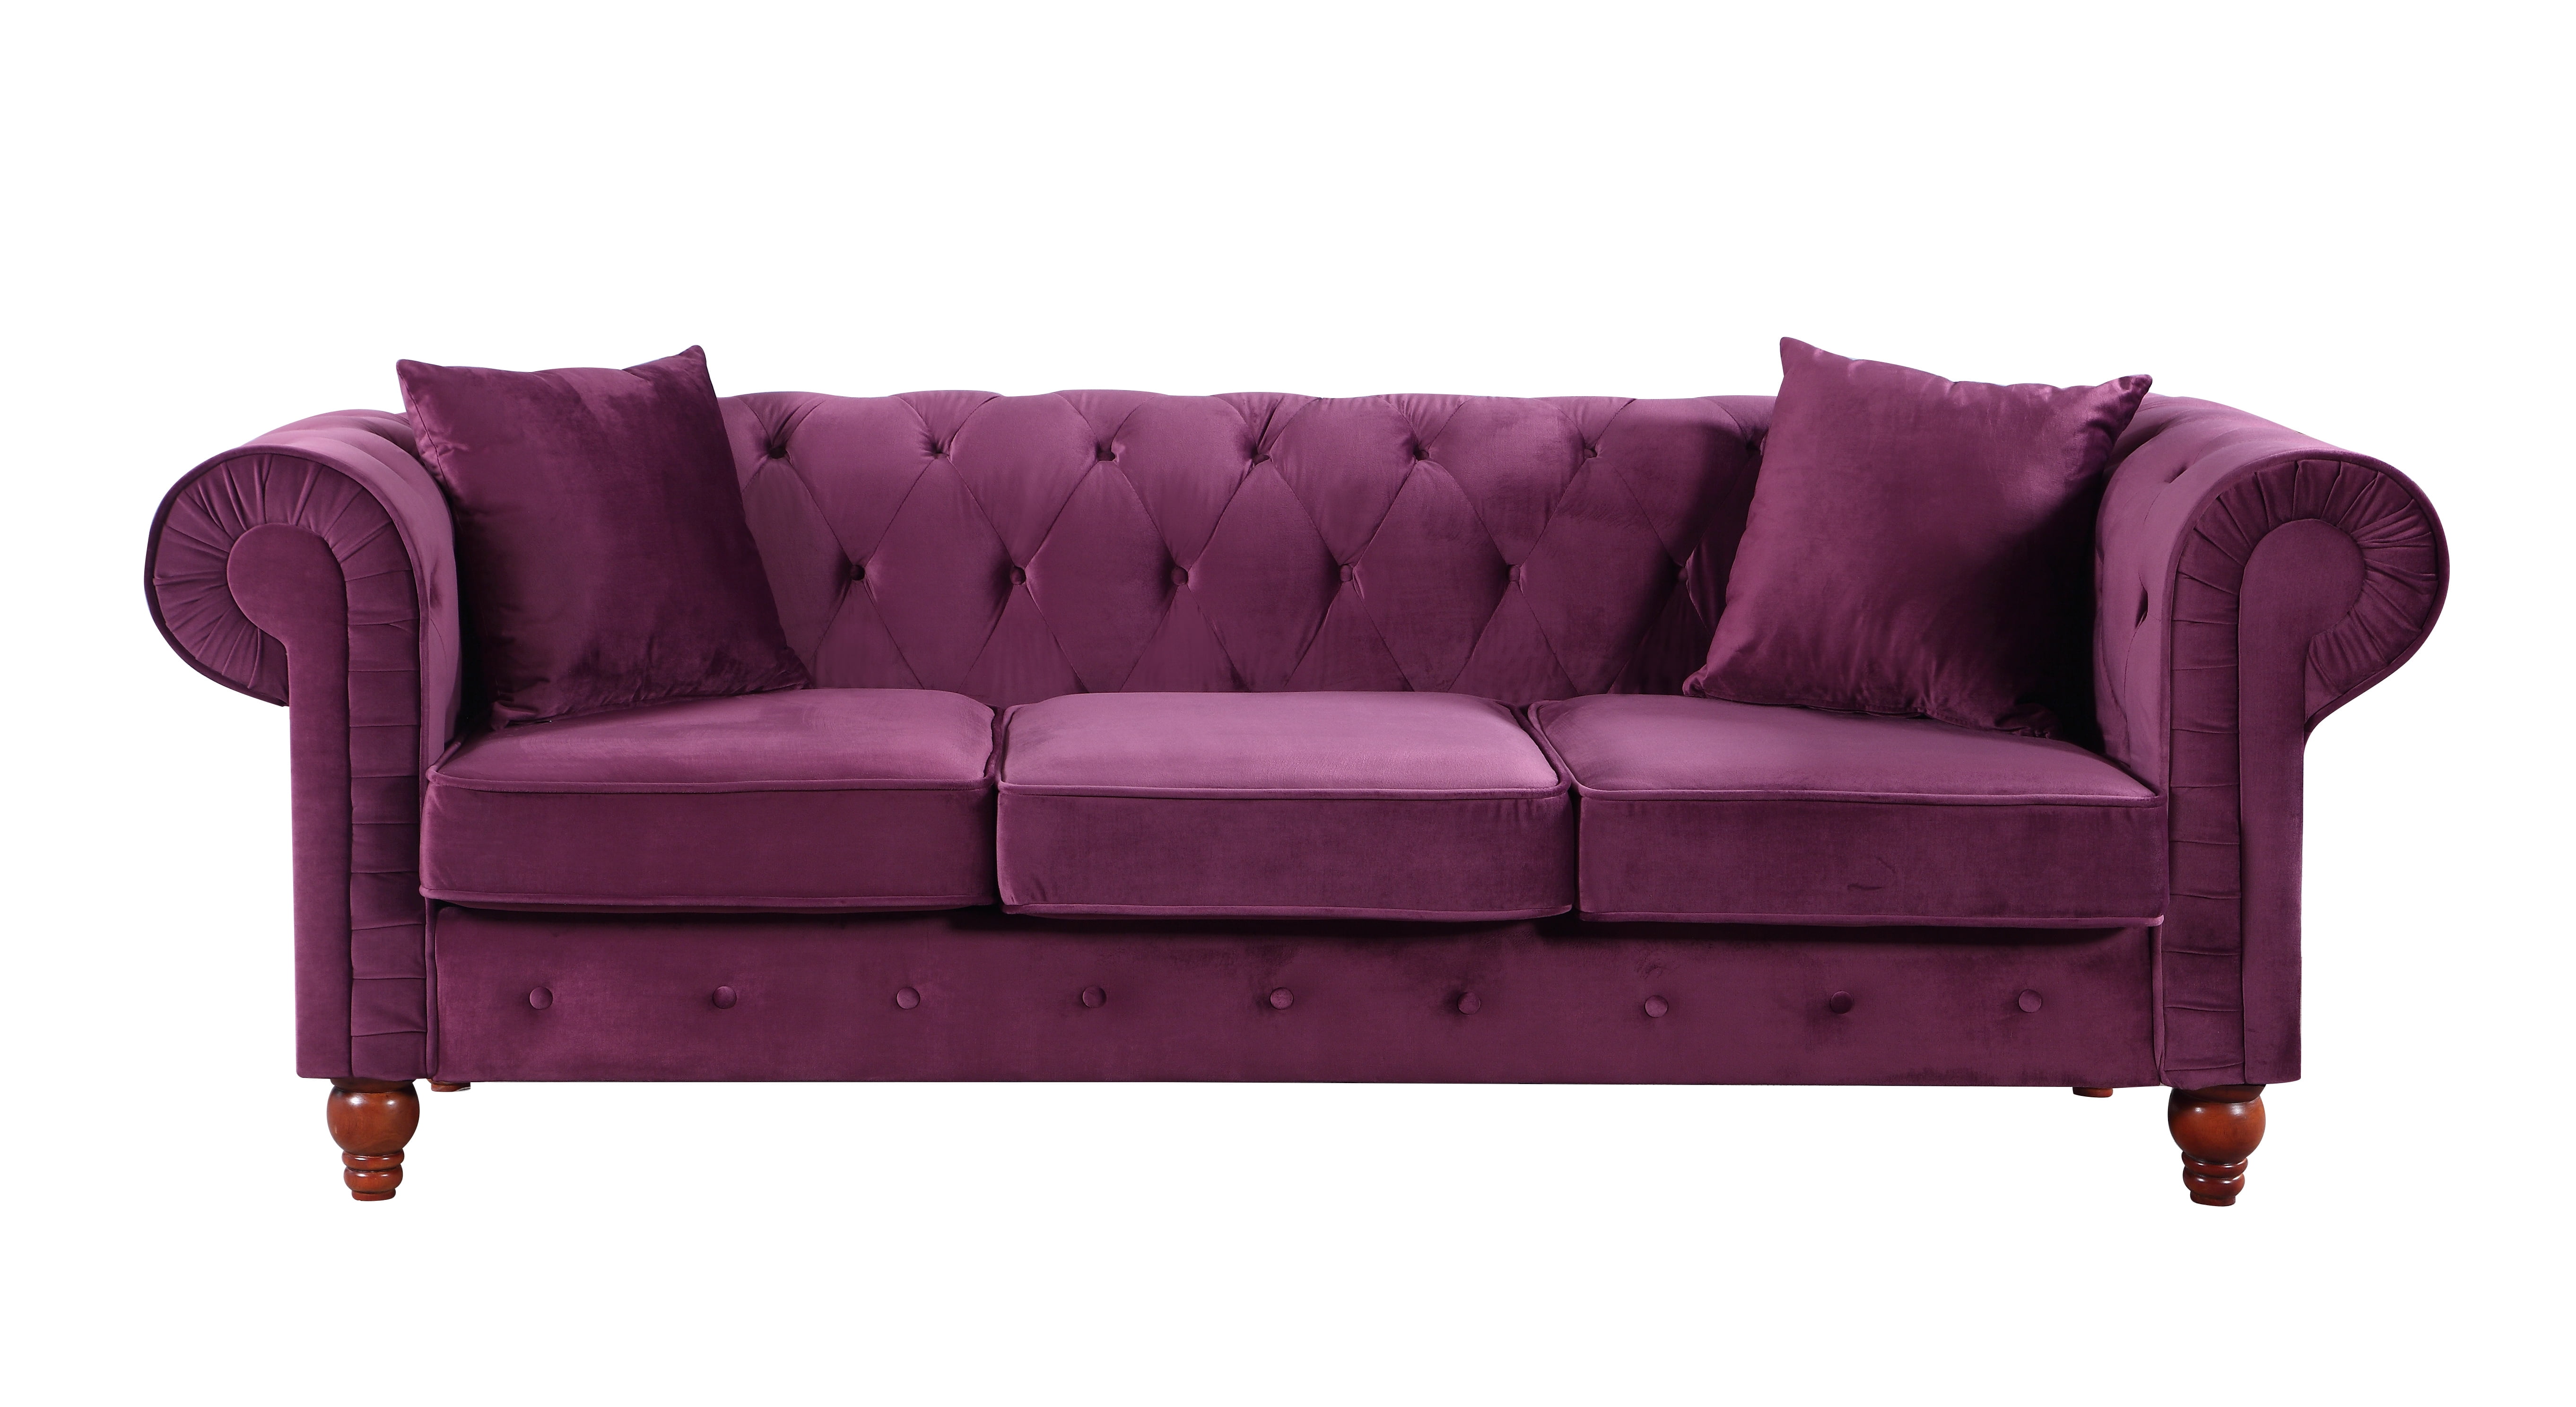 Vintage Style Velvet Chesterfield Sofa In Purple - Walmart.com